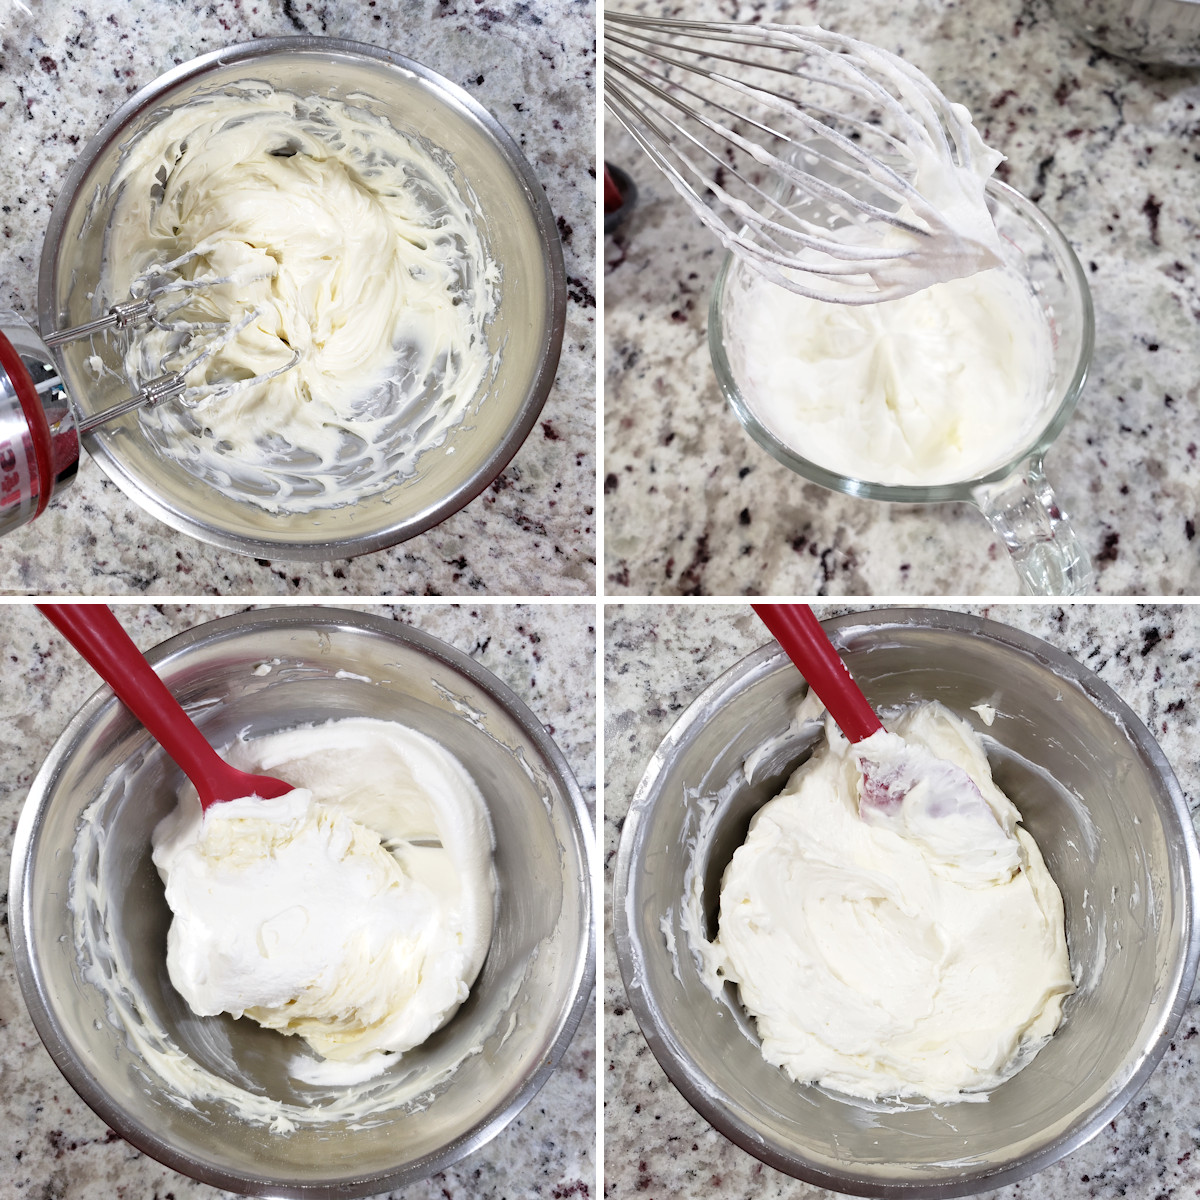 Mixing cheesecake dip ingredients in a metal bowl.